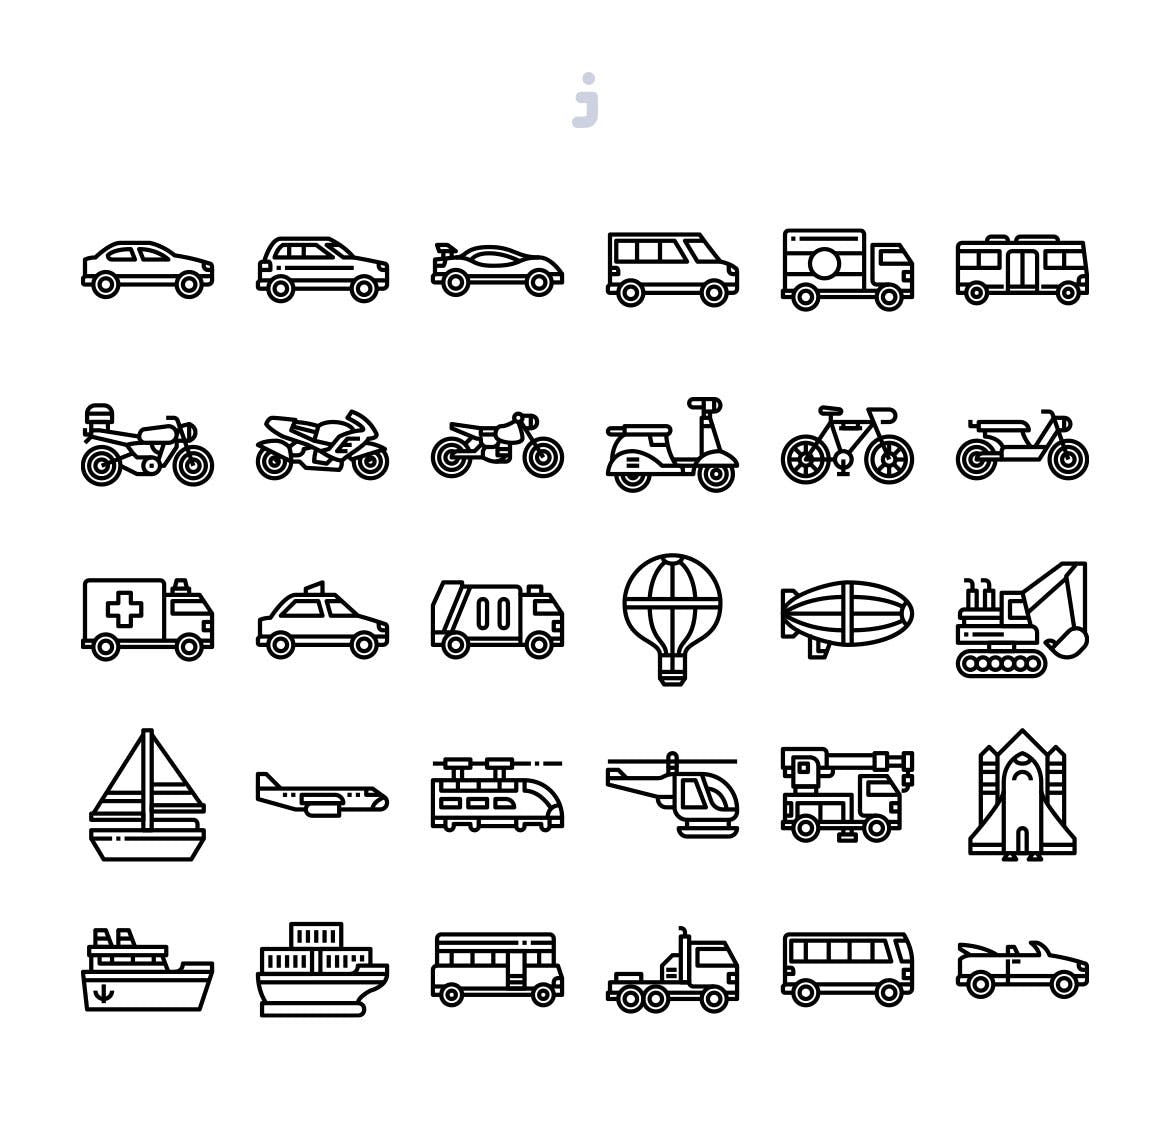 30枚交通工具矢量图标 30 Transportation Icons插图(2)